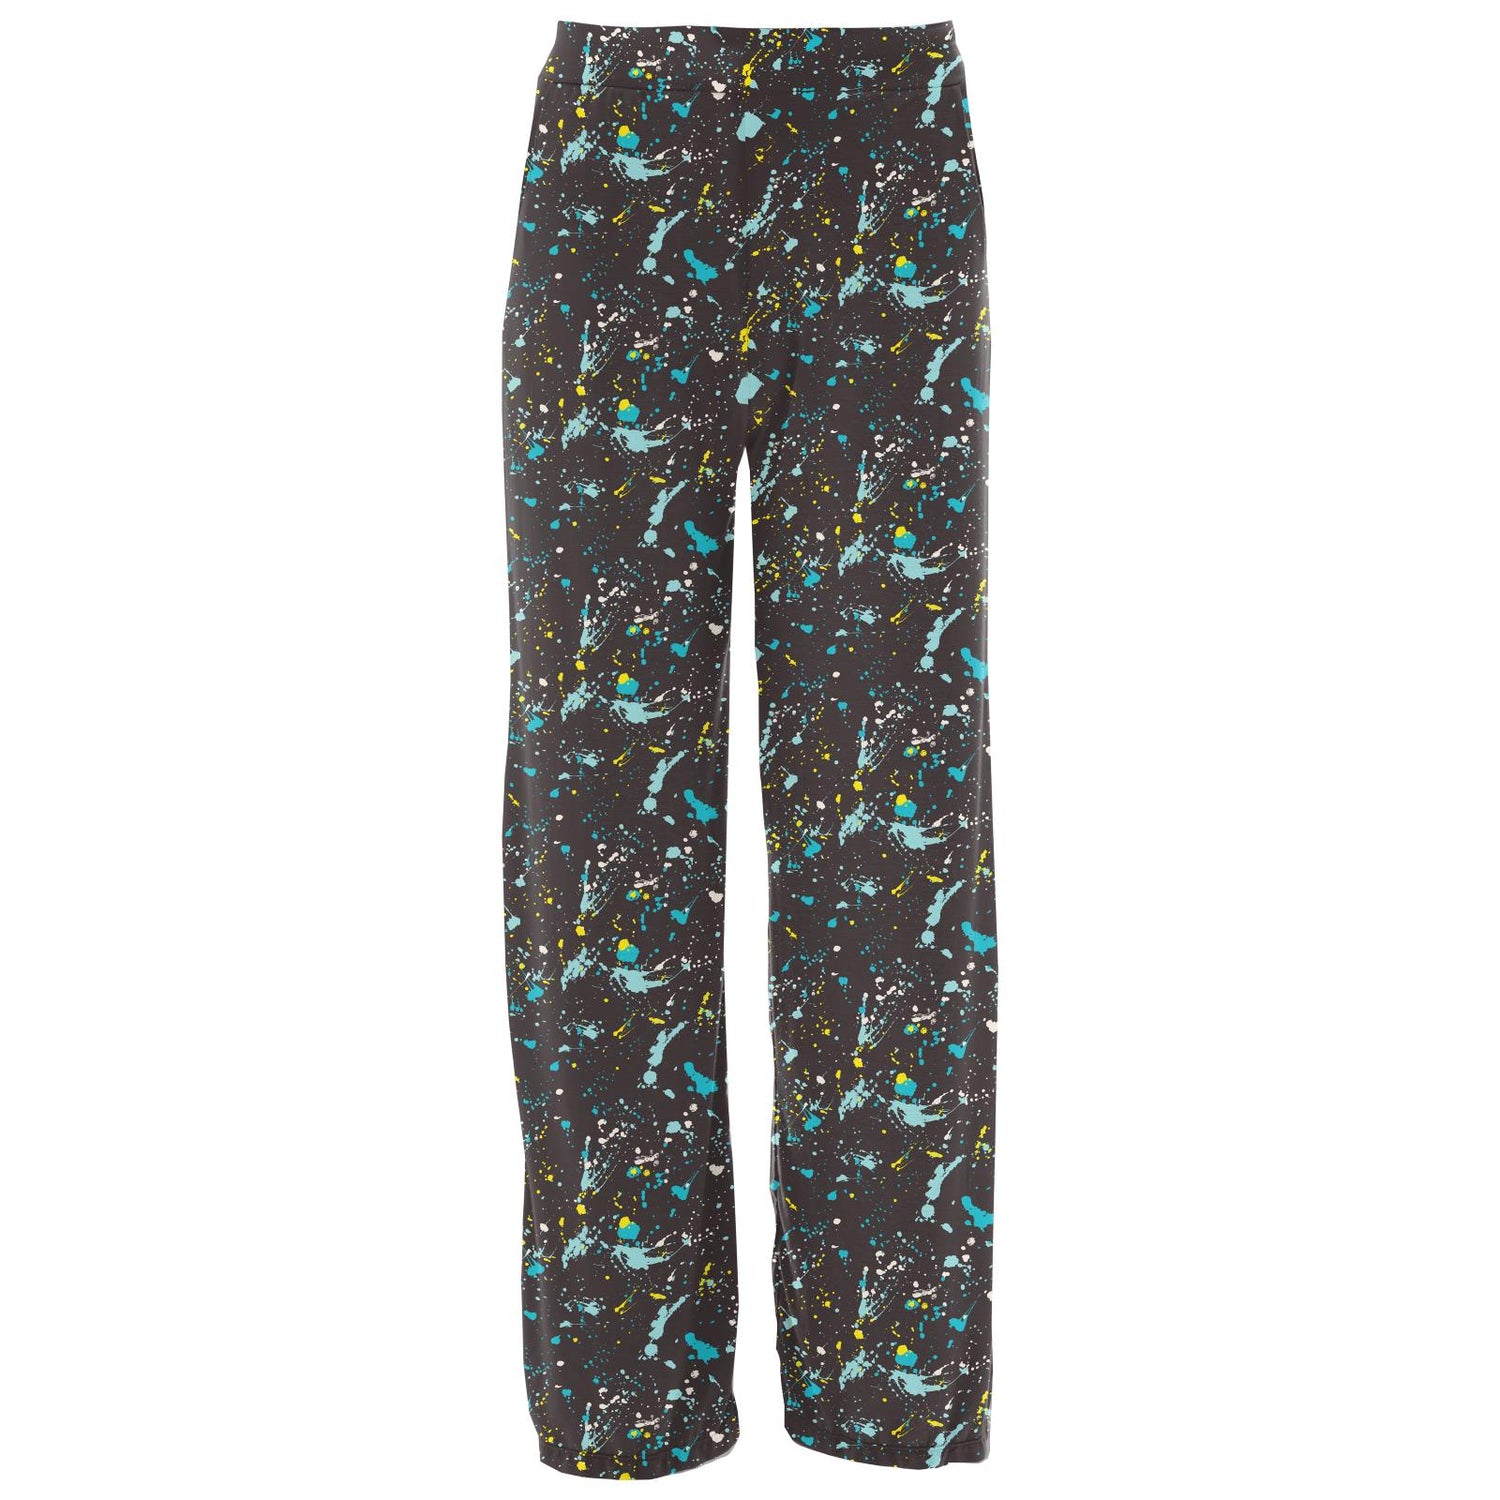 Women's Print Pajama Pants in Confetti Splatter Paint